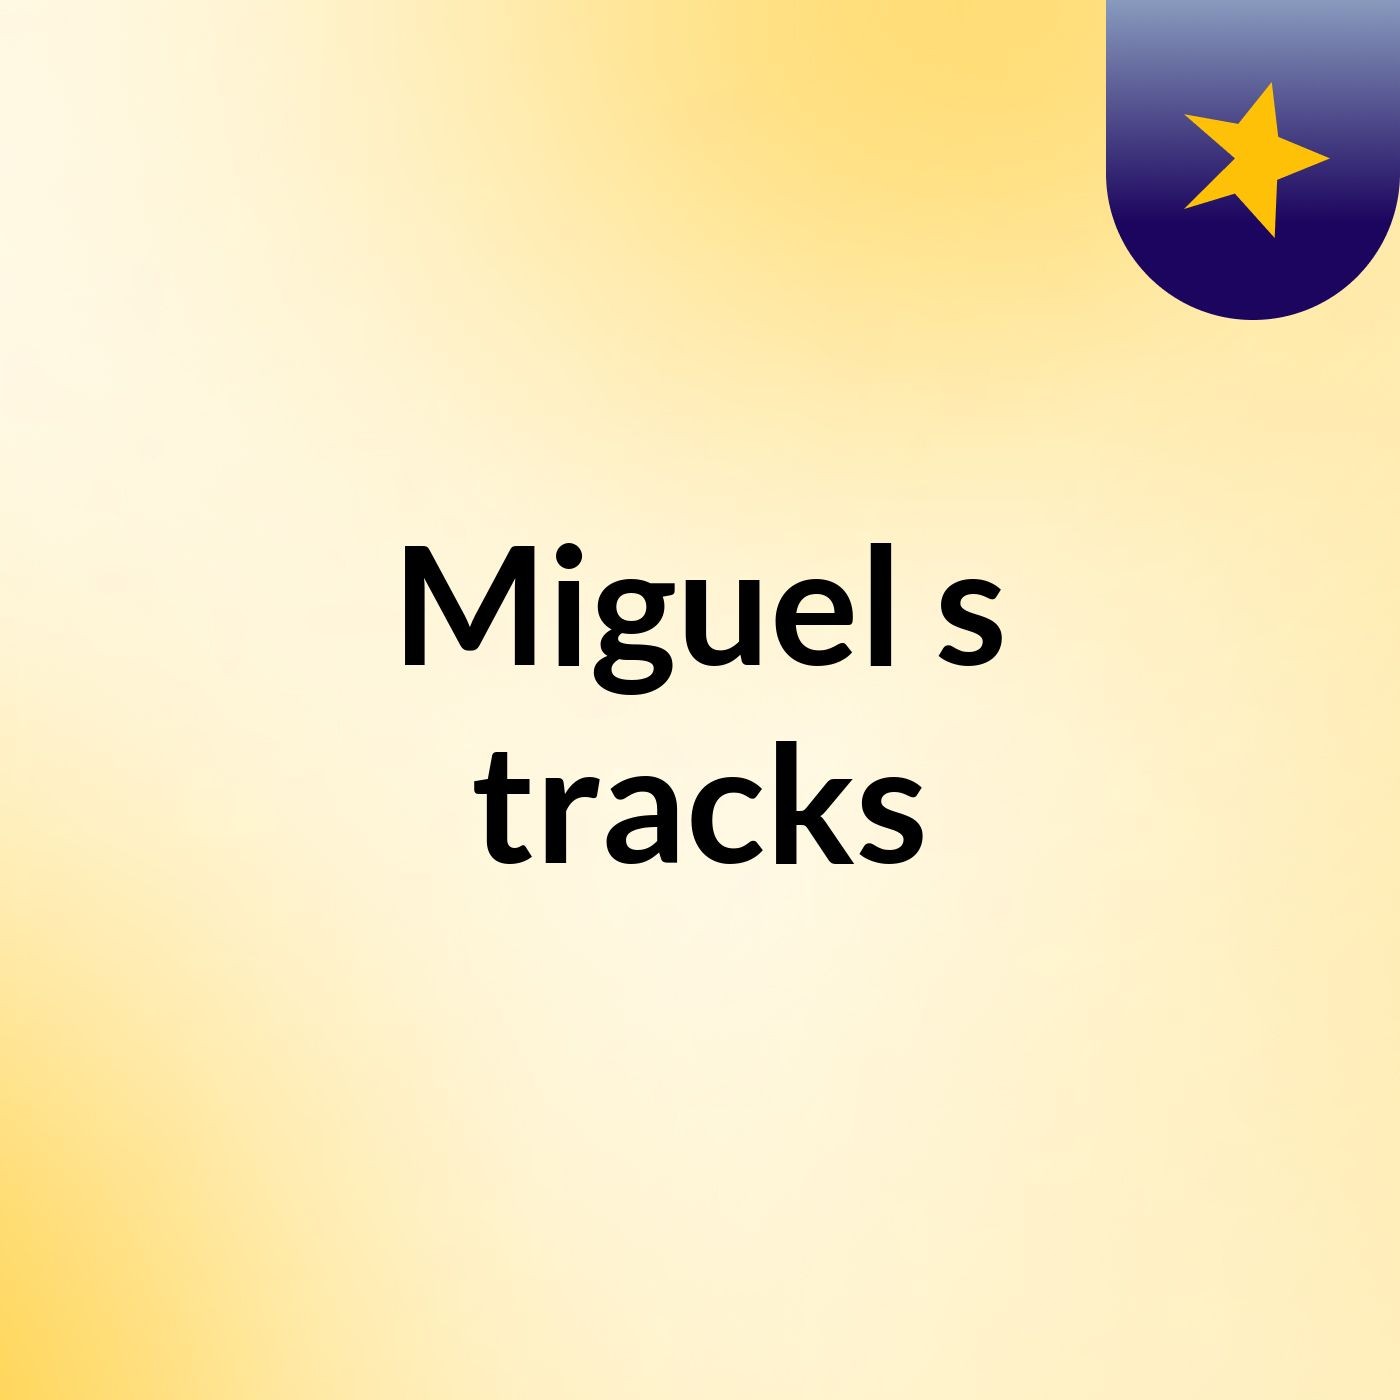 Miguel's tracks